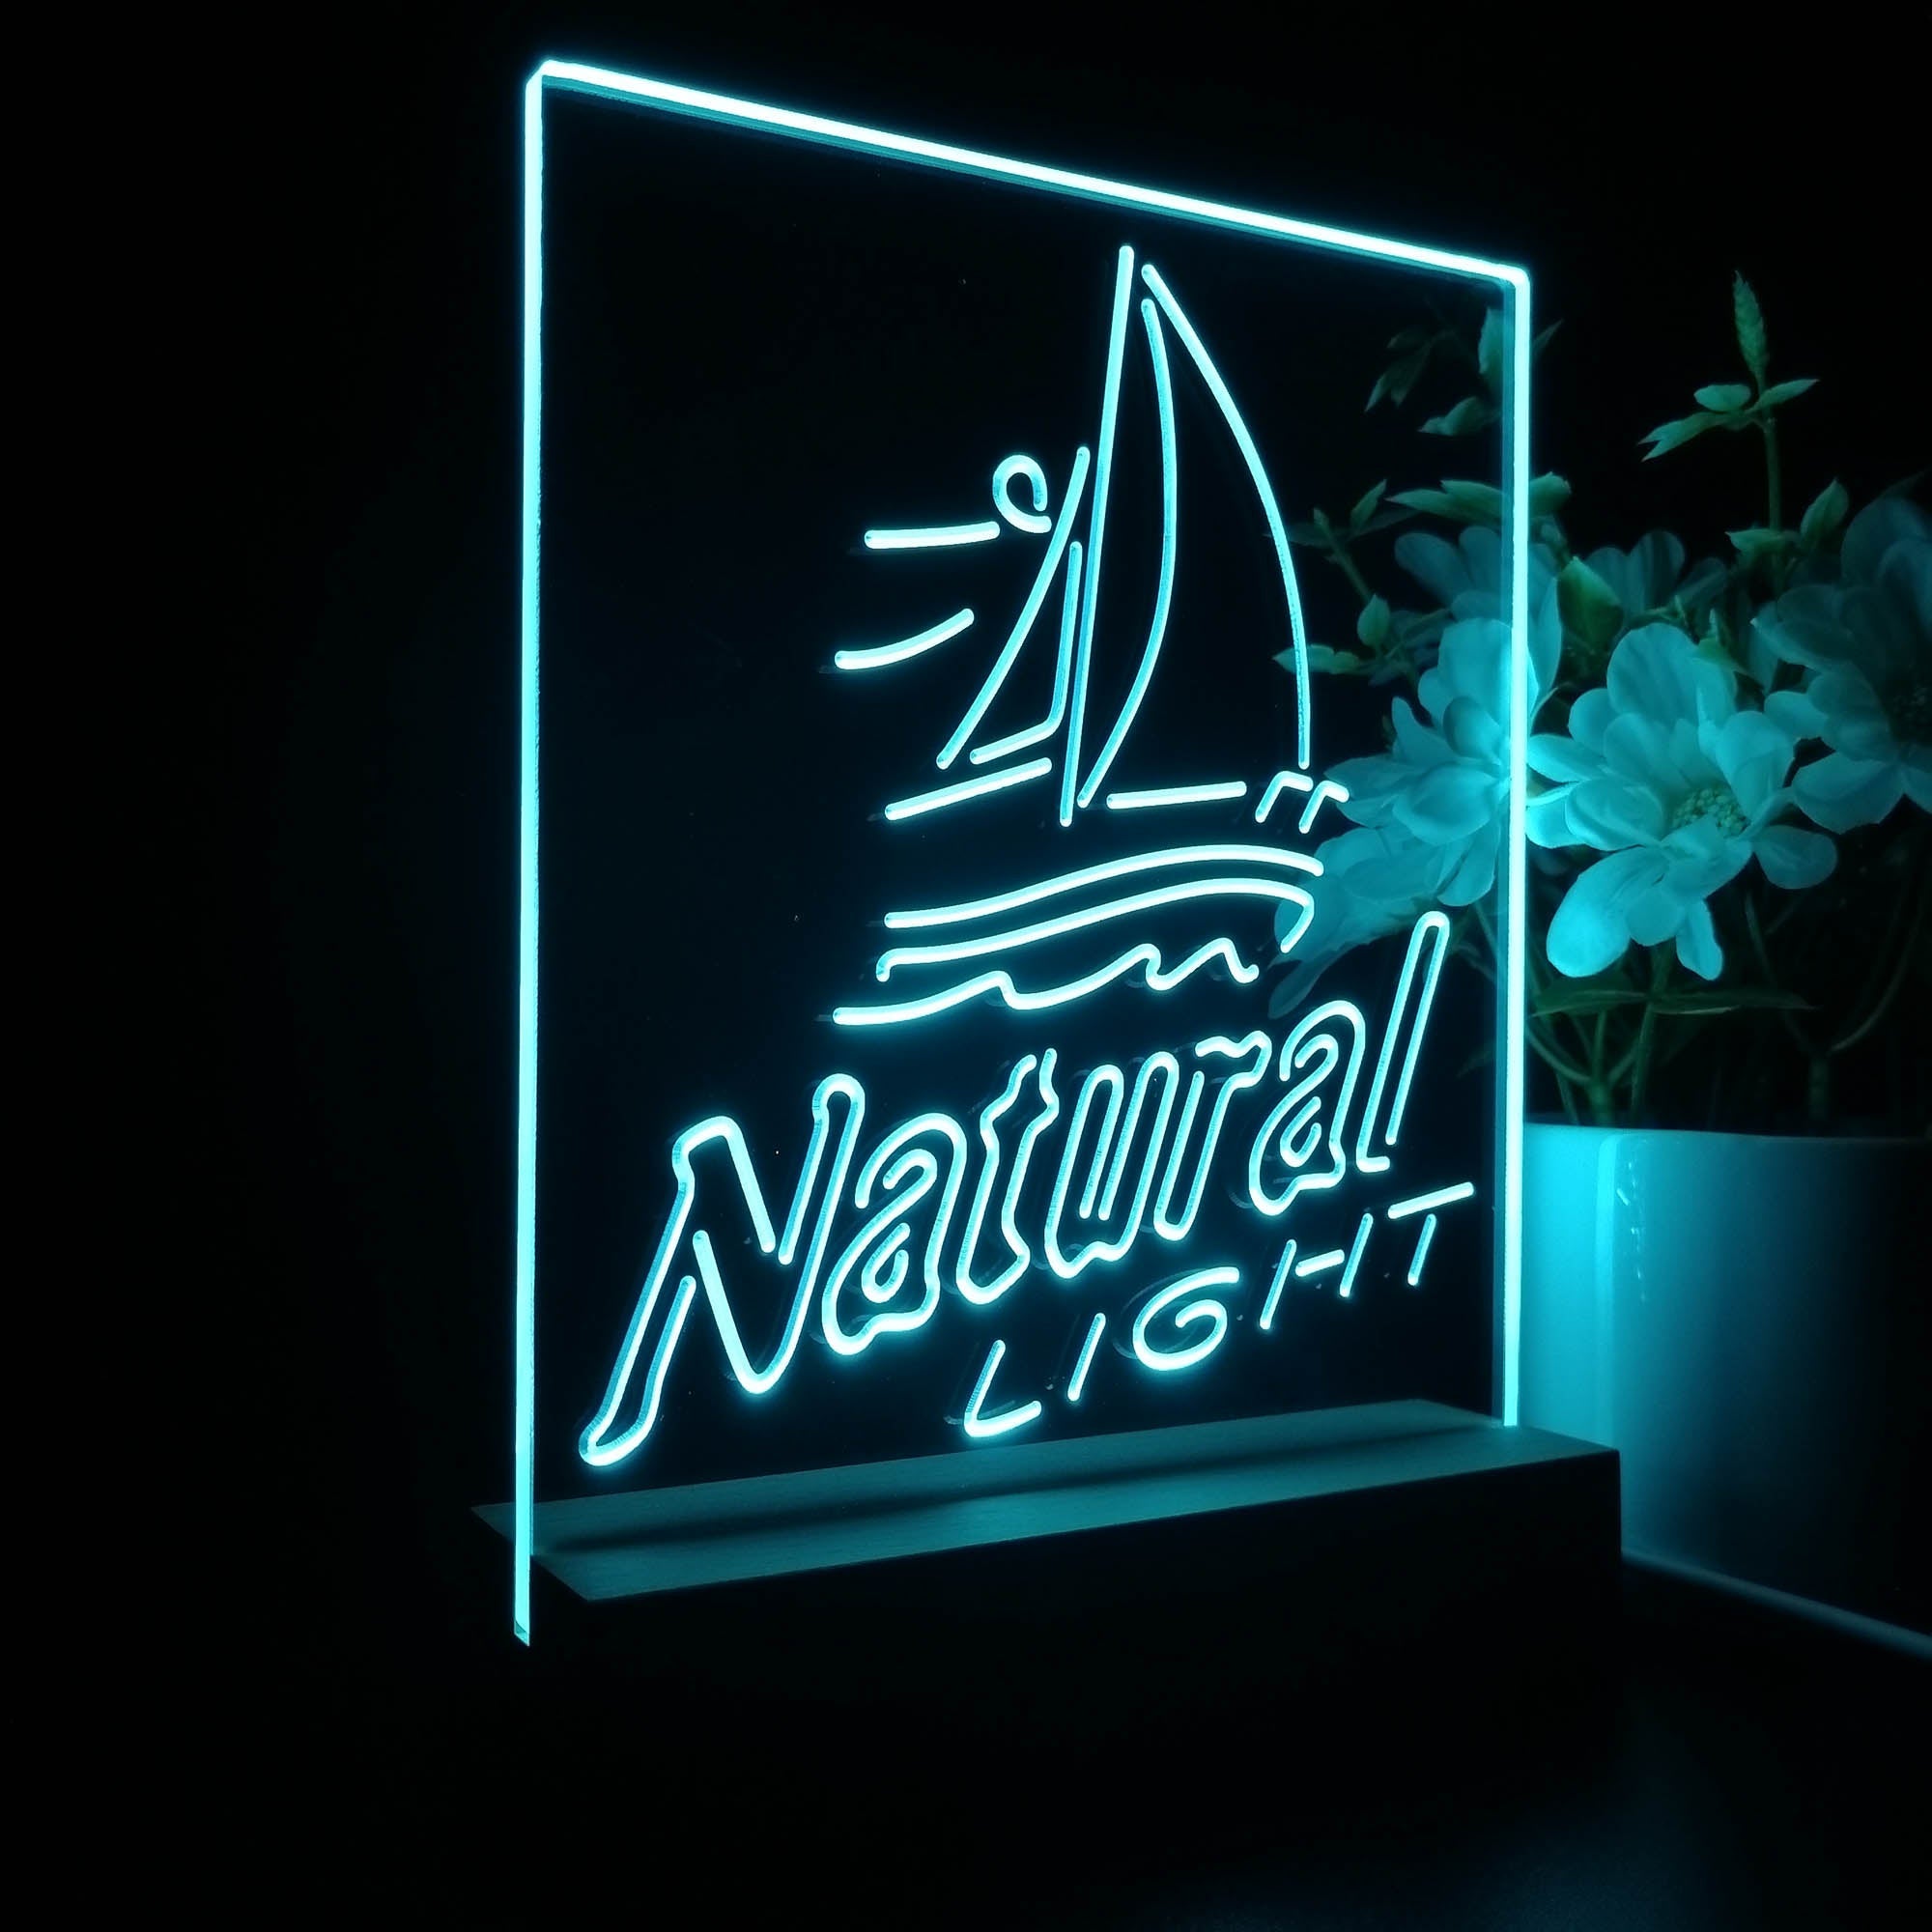 Natural Light Sailboat Night Light Neon Pub Bar Lamp